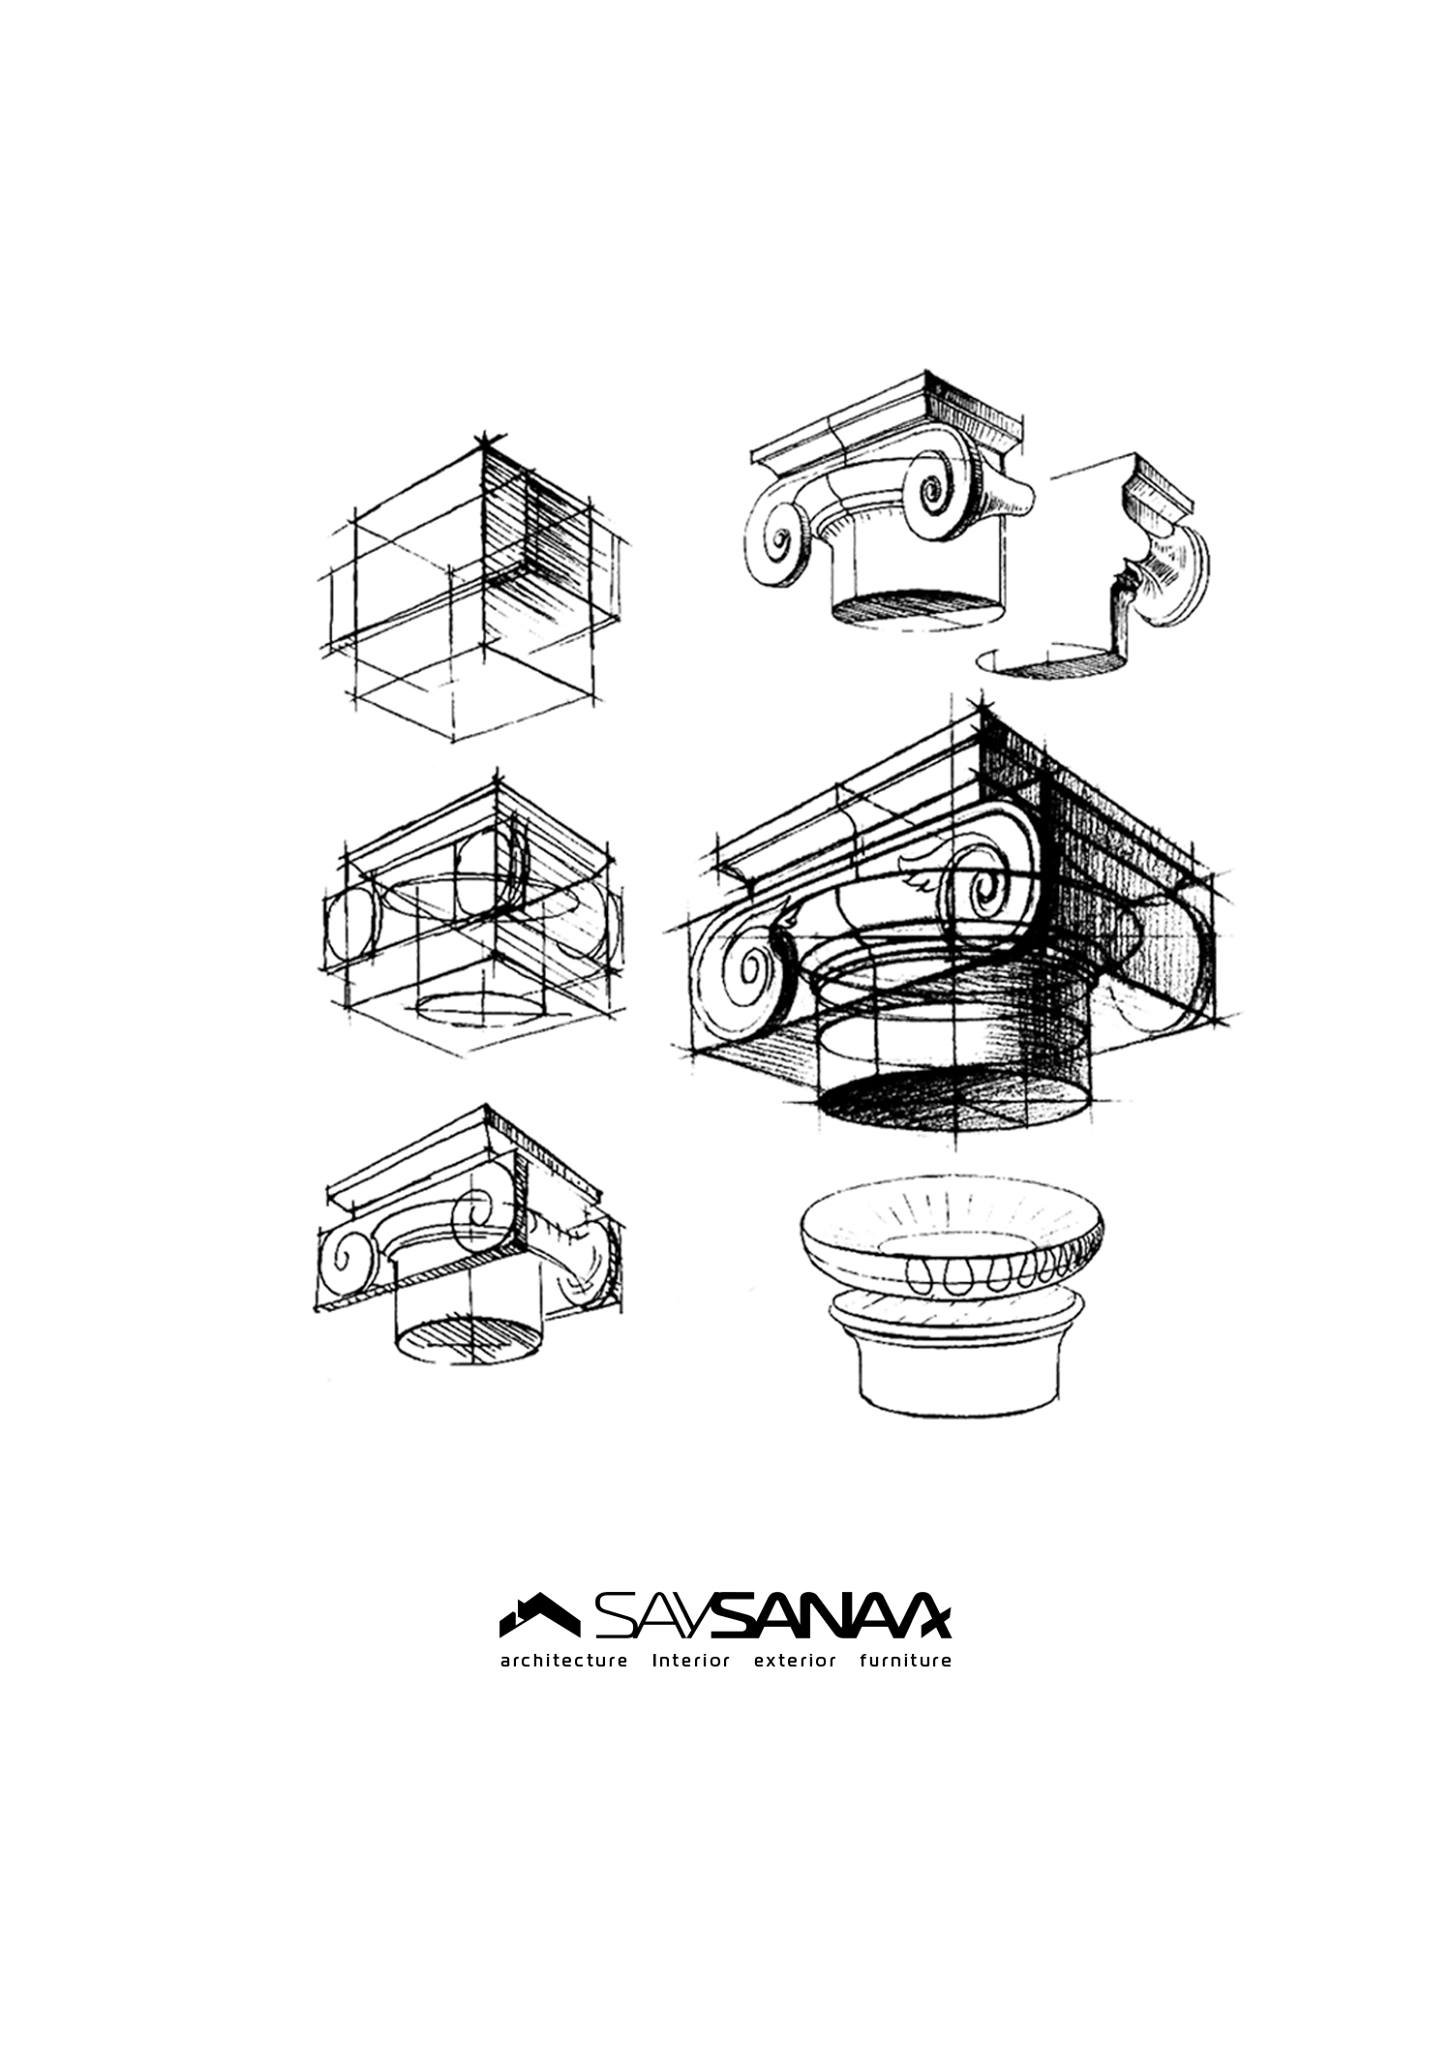 54 – Saysanaa – Саясанаа – Decello 03